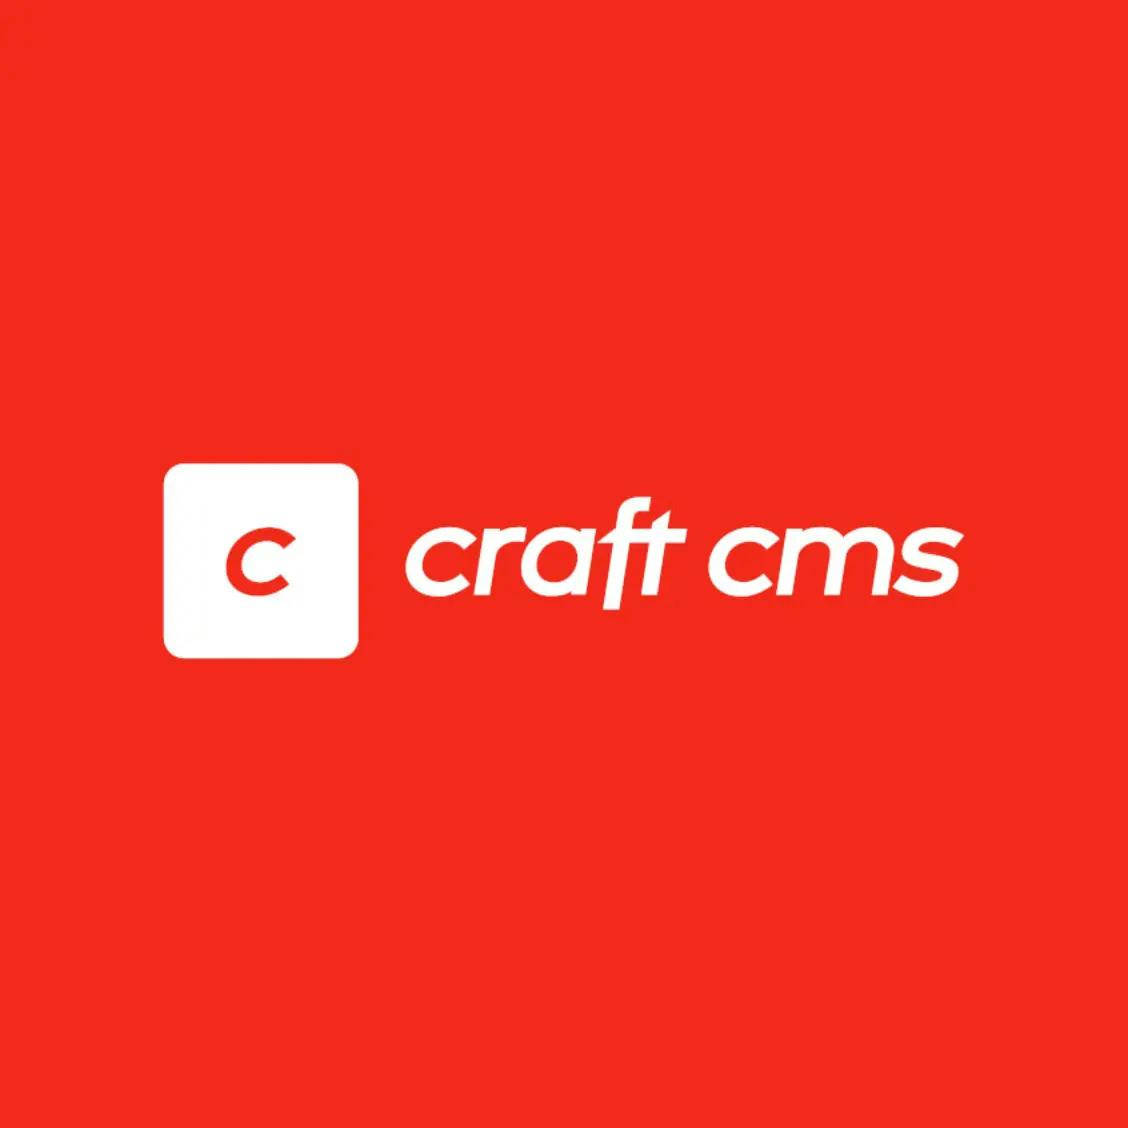 an image of the Craft cms logo